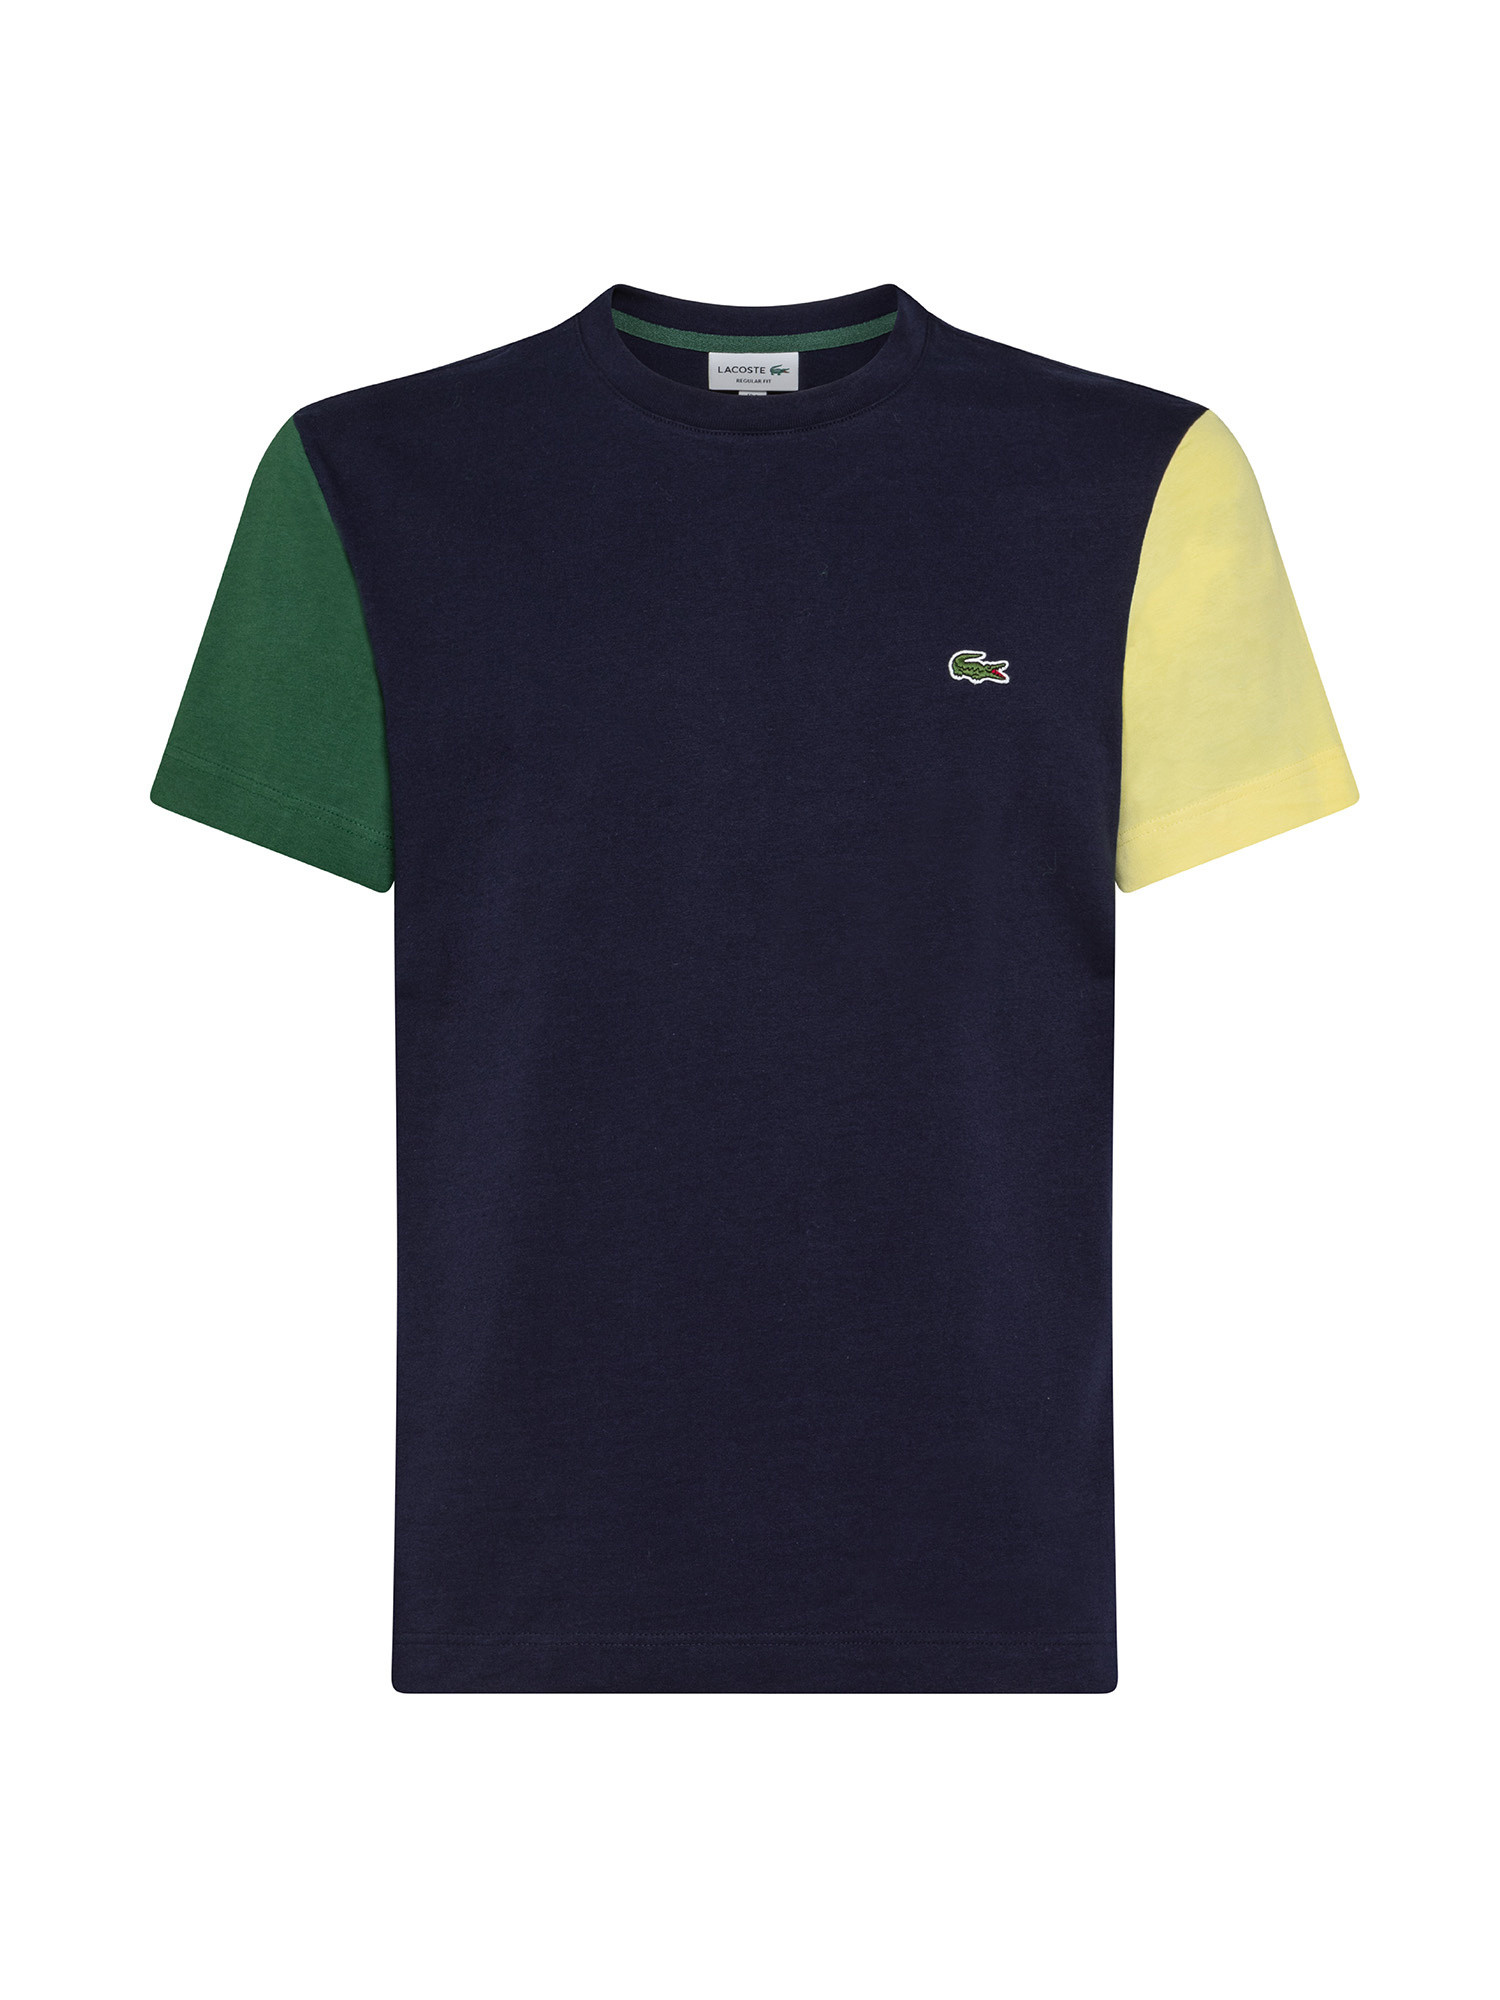 Lacoste - Regular fit color block cotton jersey T-shirt, Blue, large image number 0